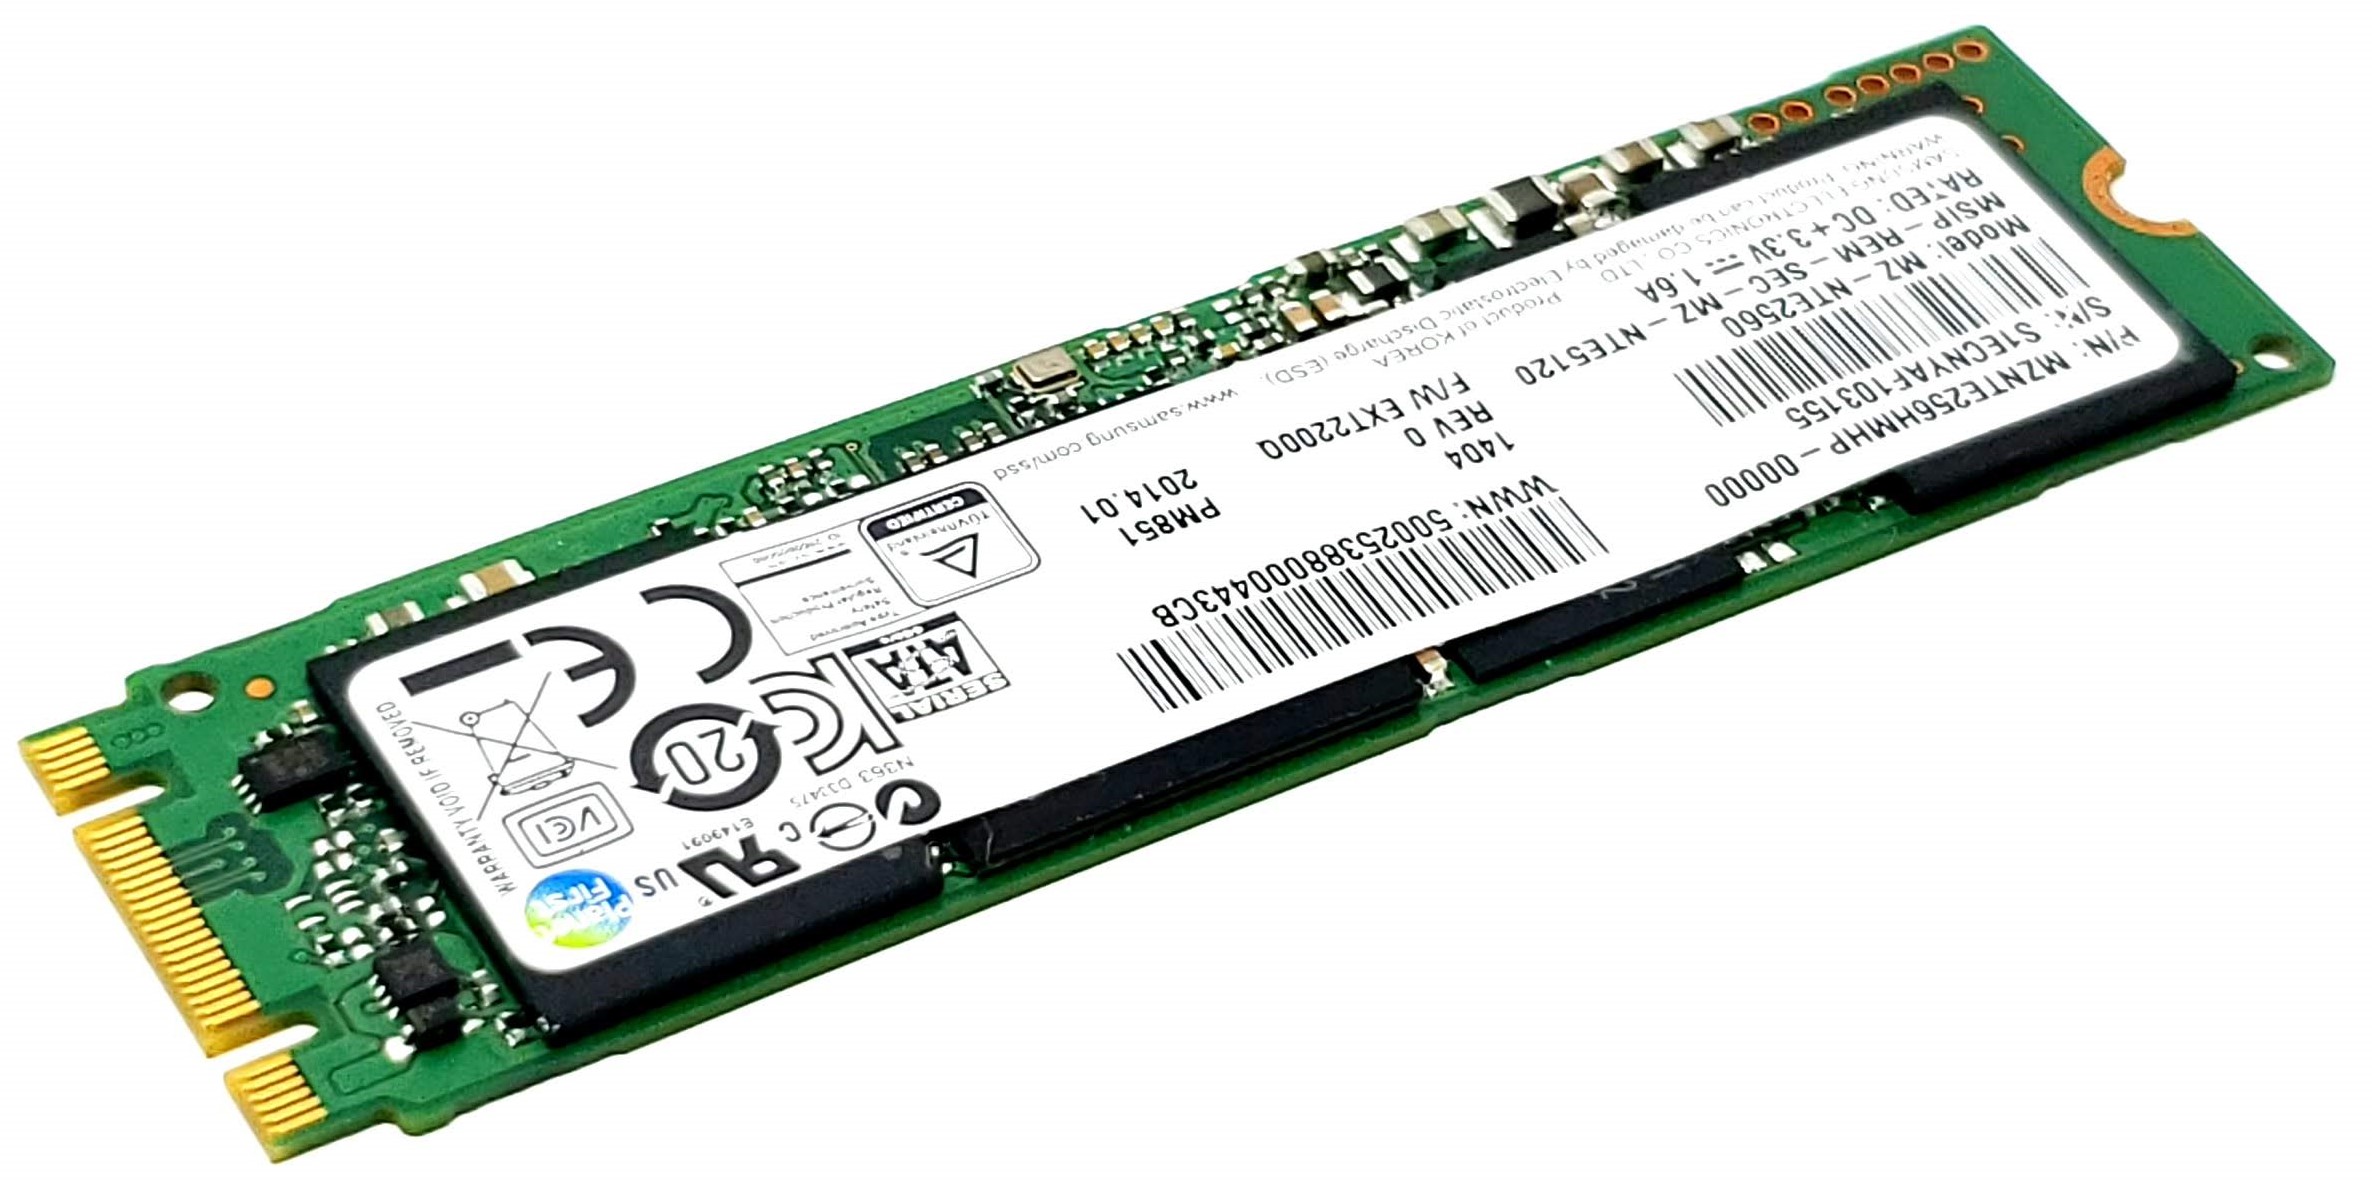 Samsung SSD M.2 SATA 512GB使用時間1088hPC/タブレット